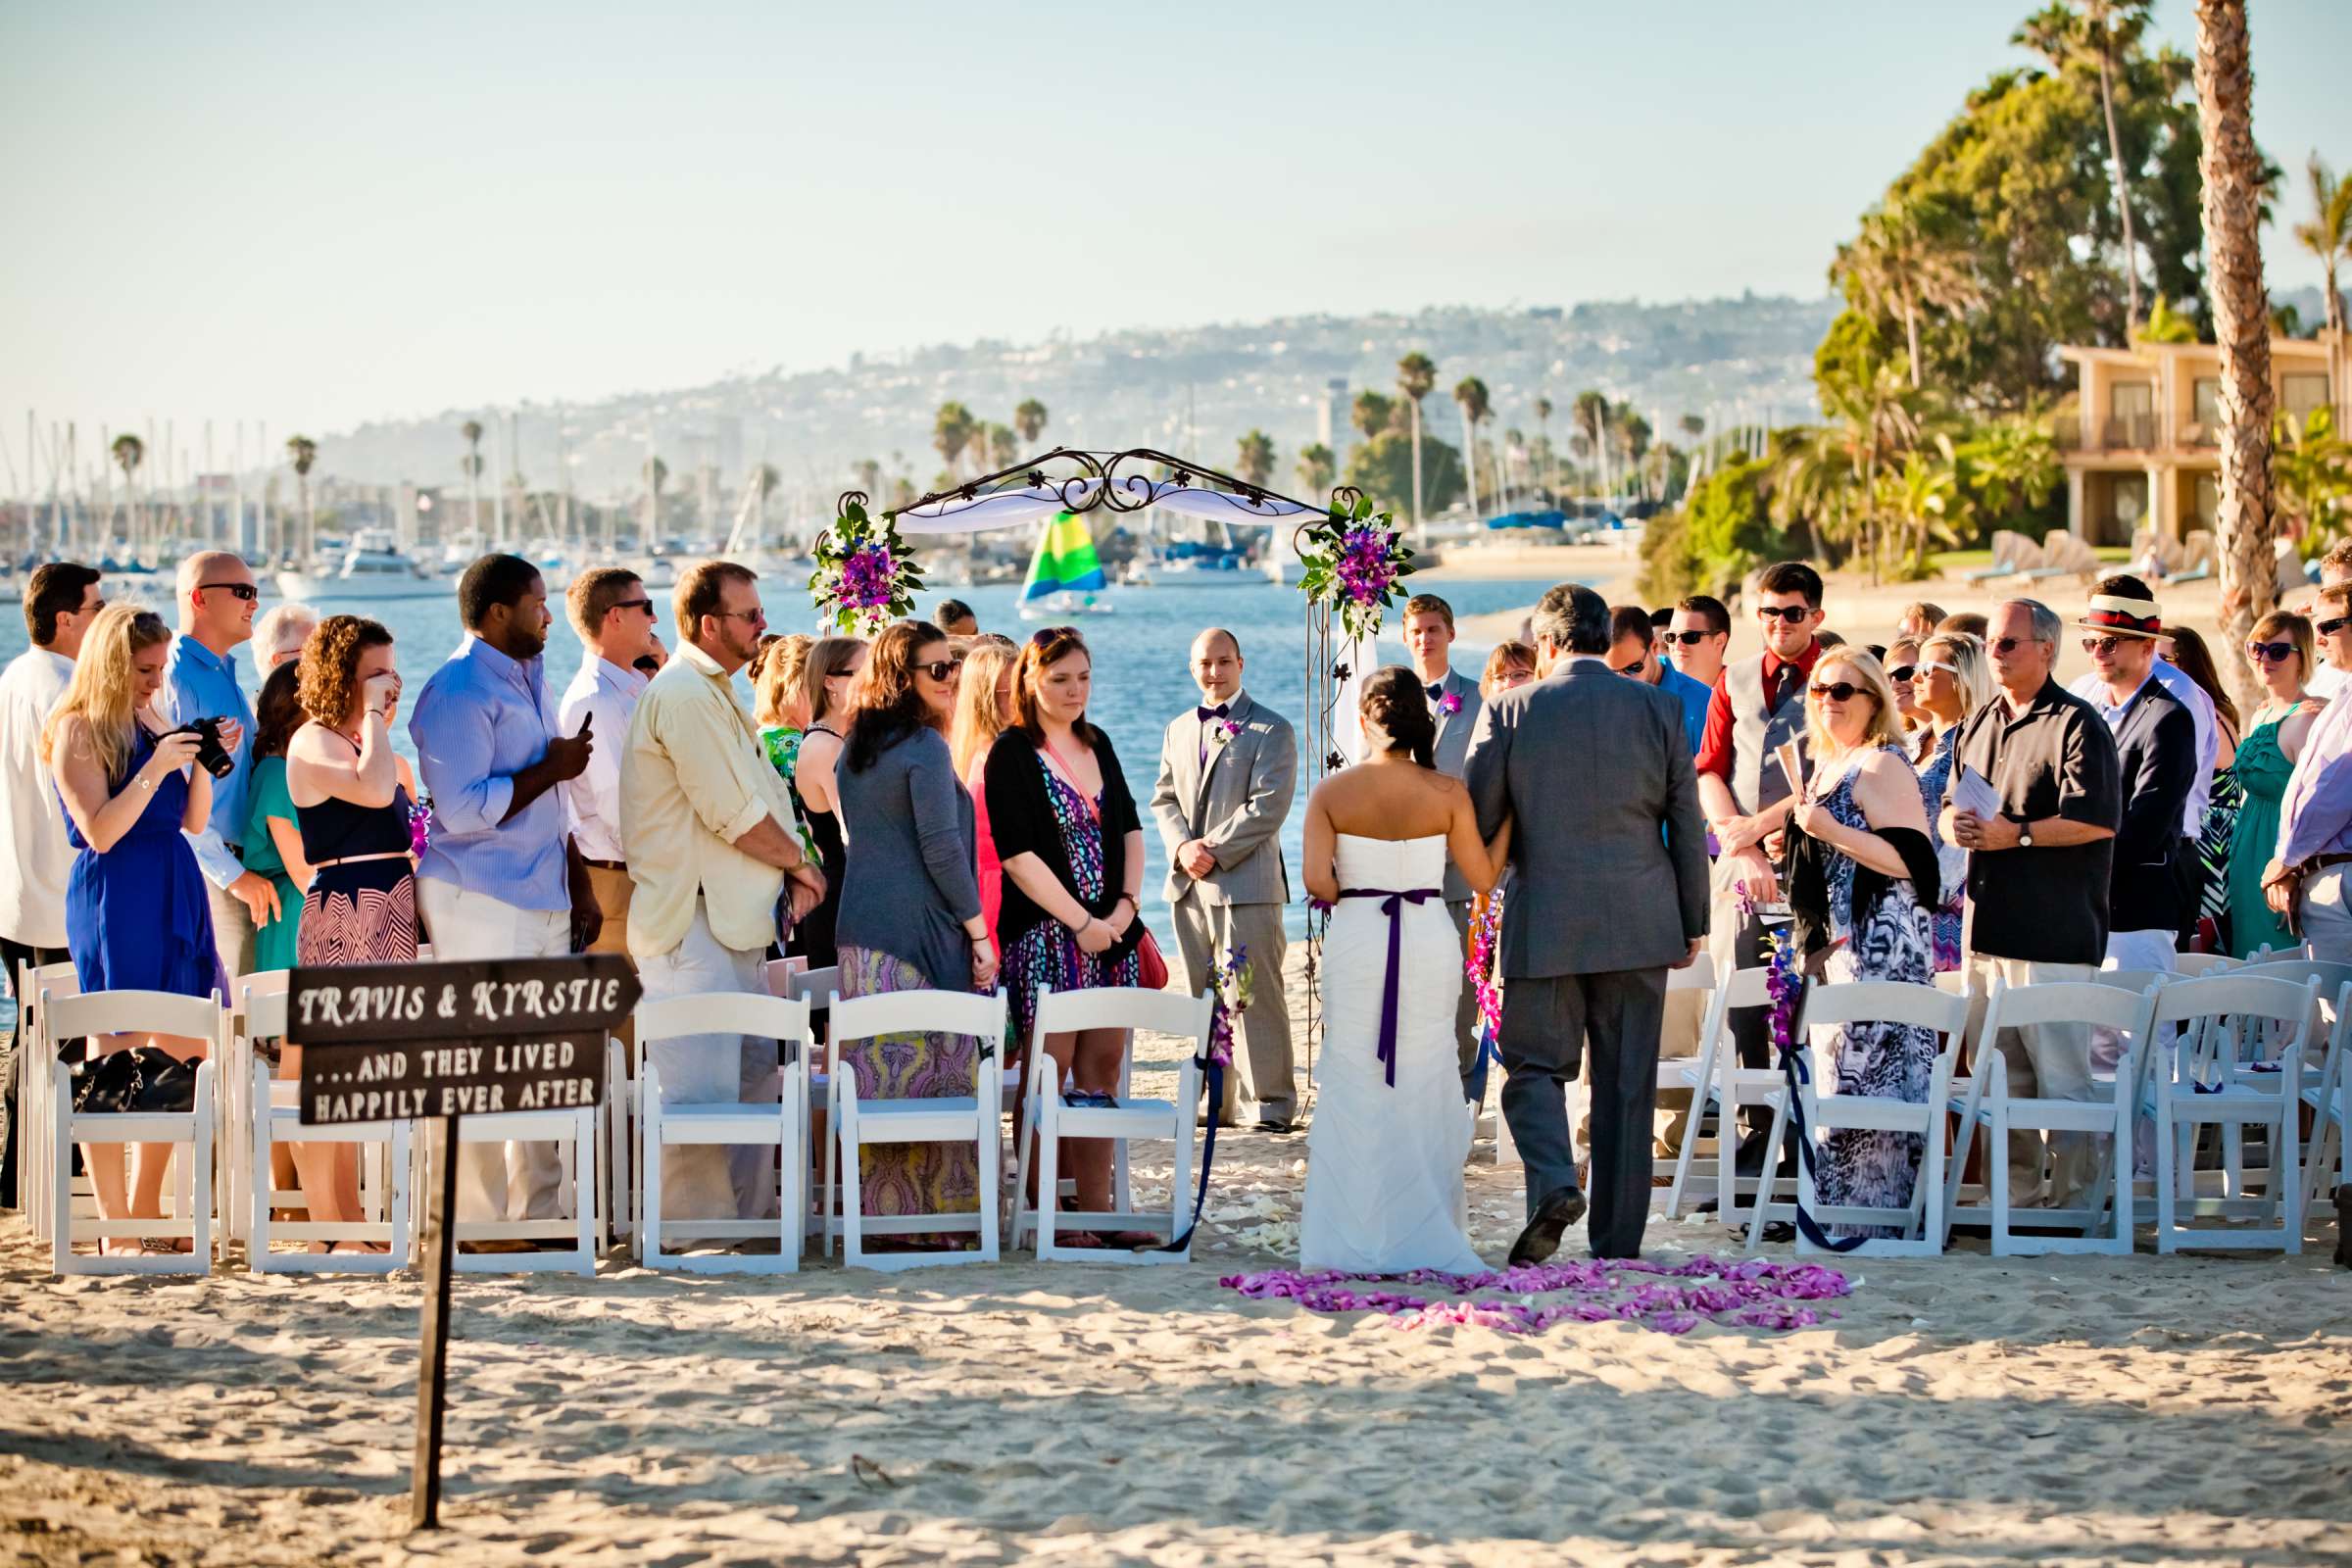 Bahia Hotel Wedding, Kyrstie and Travis Wedding Photo #128566 by True Photography